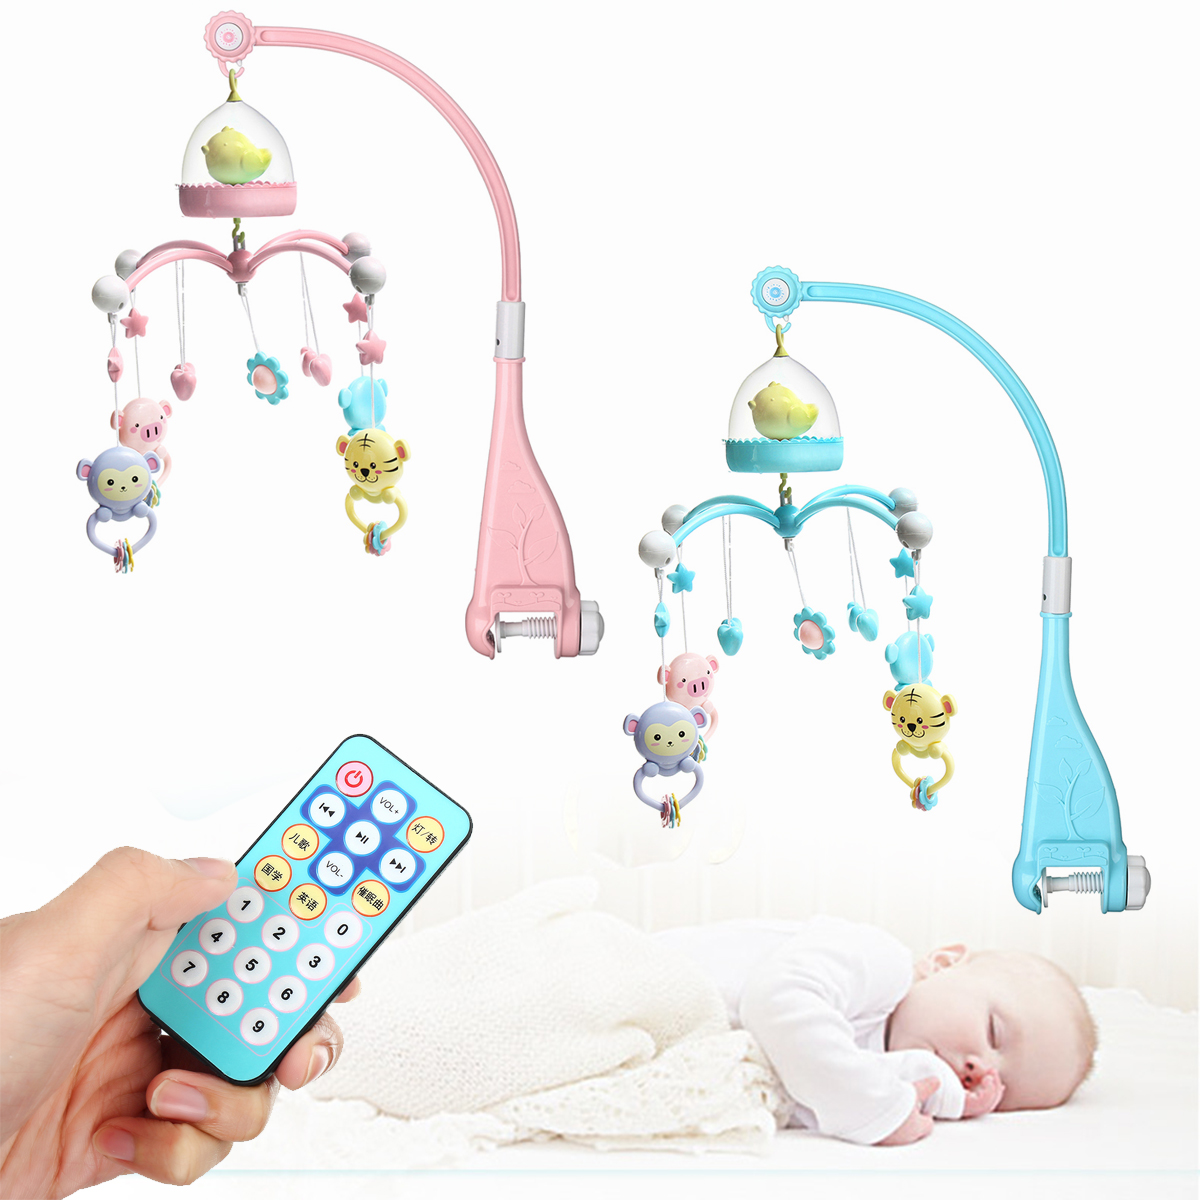 

Baby Crib Mobile Bed Bell Hanging Holder Music Box Night Light Newborn Toys Gift